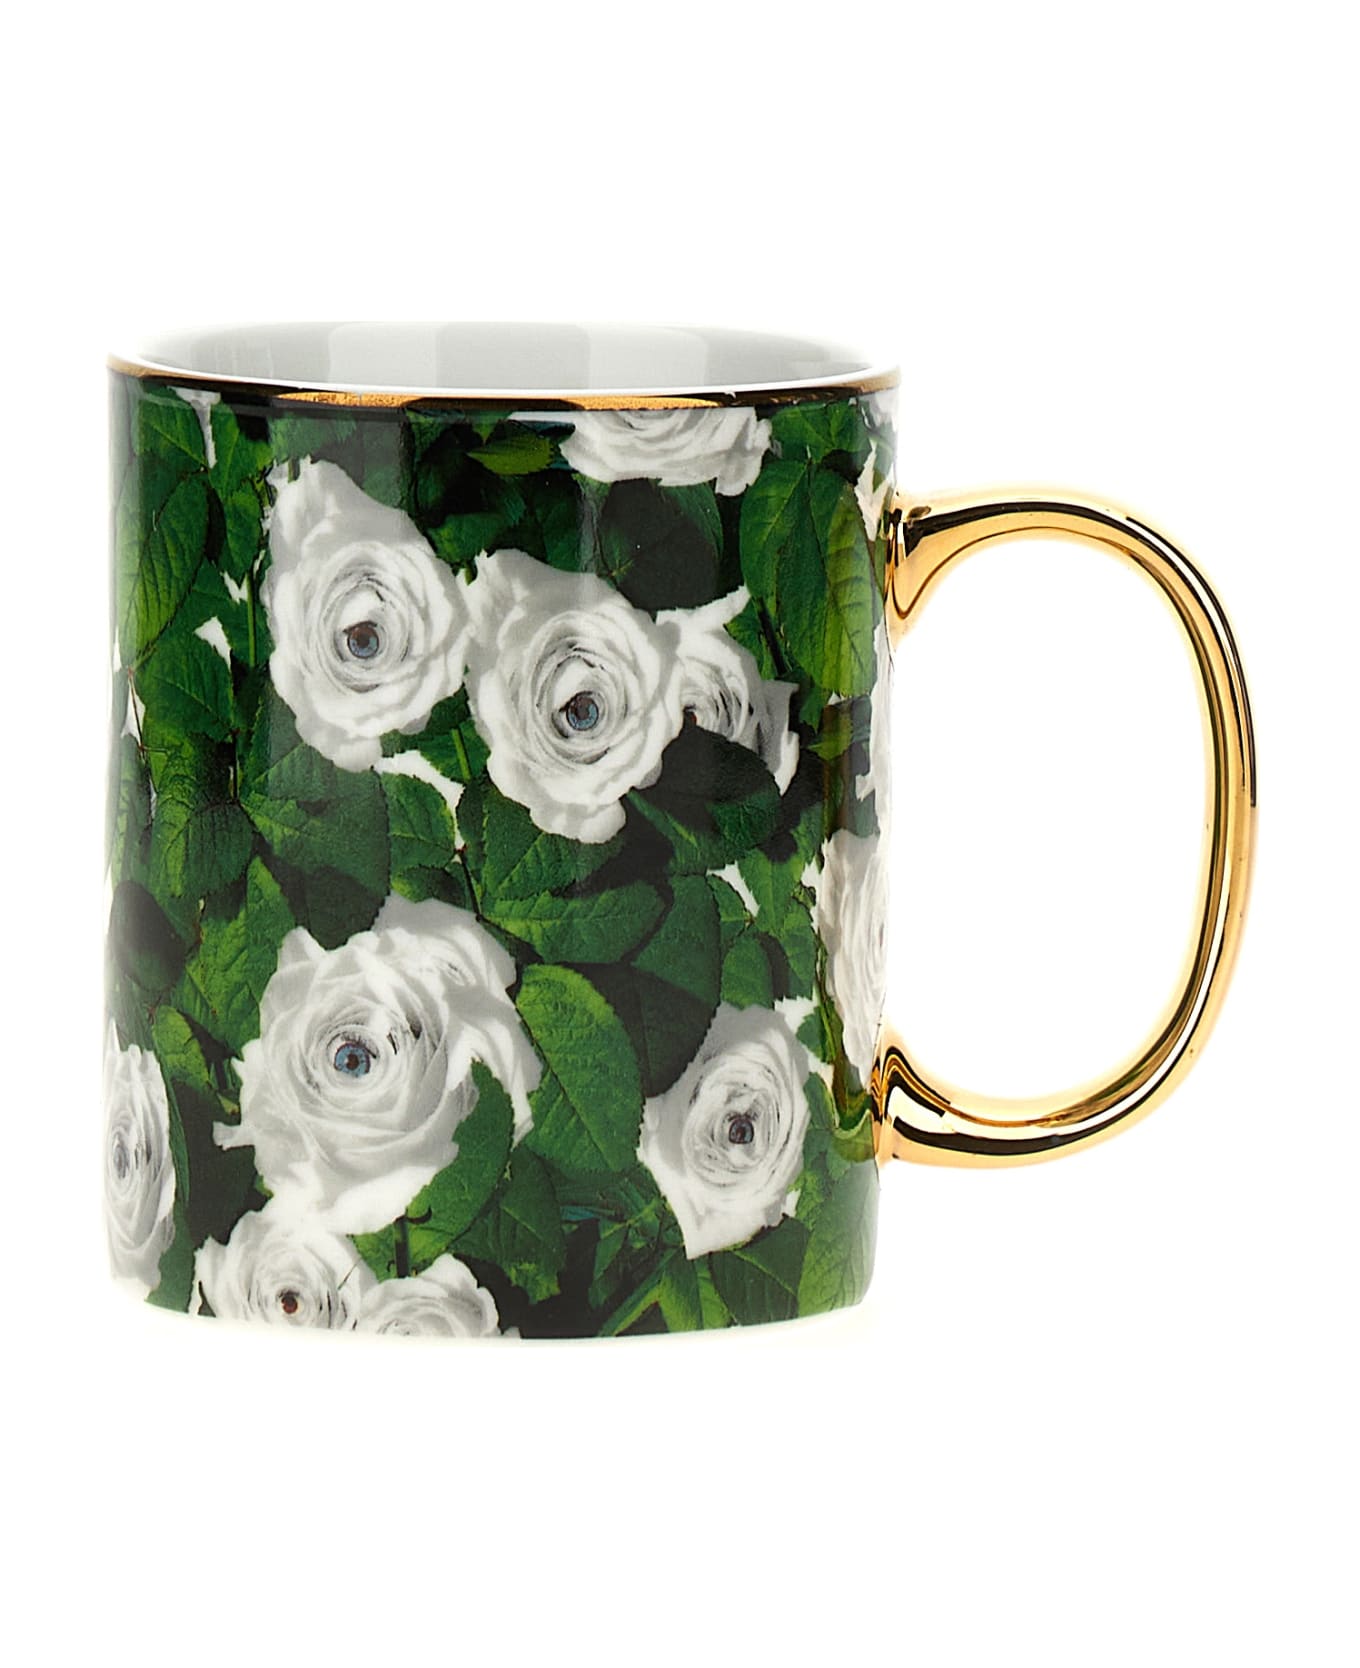 Seletti X Toiletpaper 'roses' Cup - Multicolor